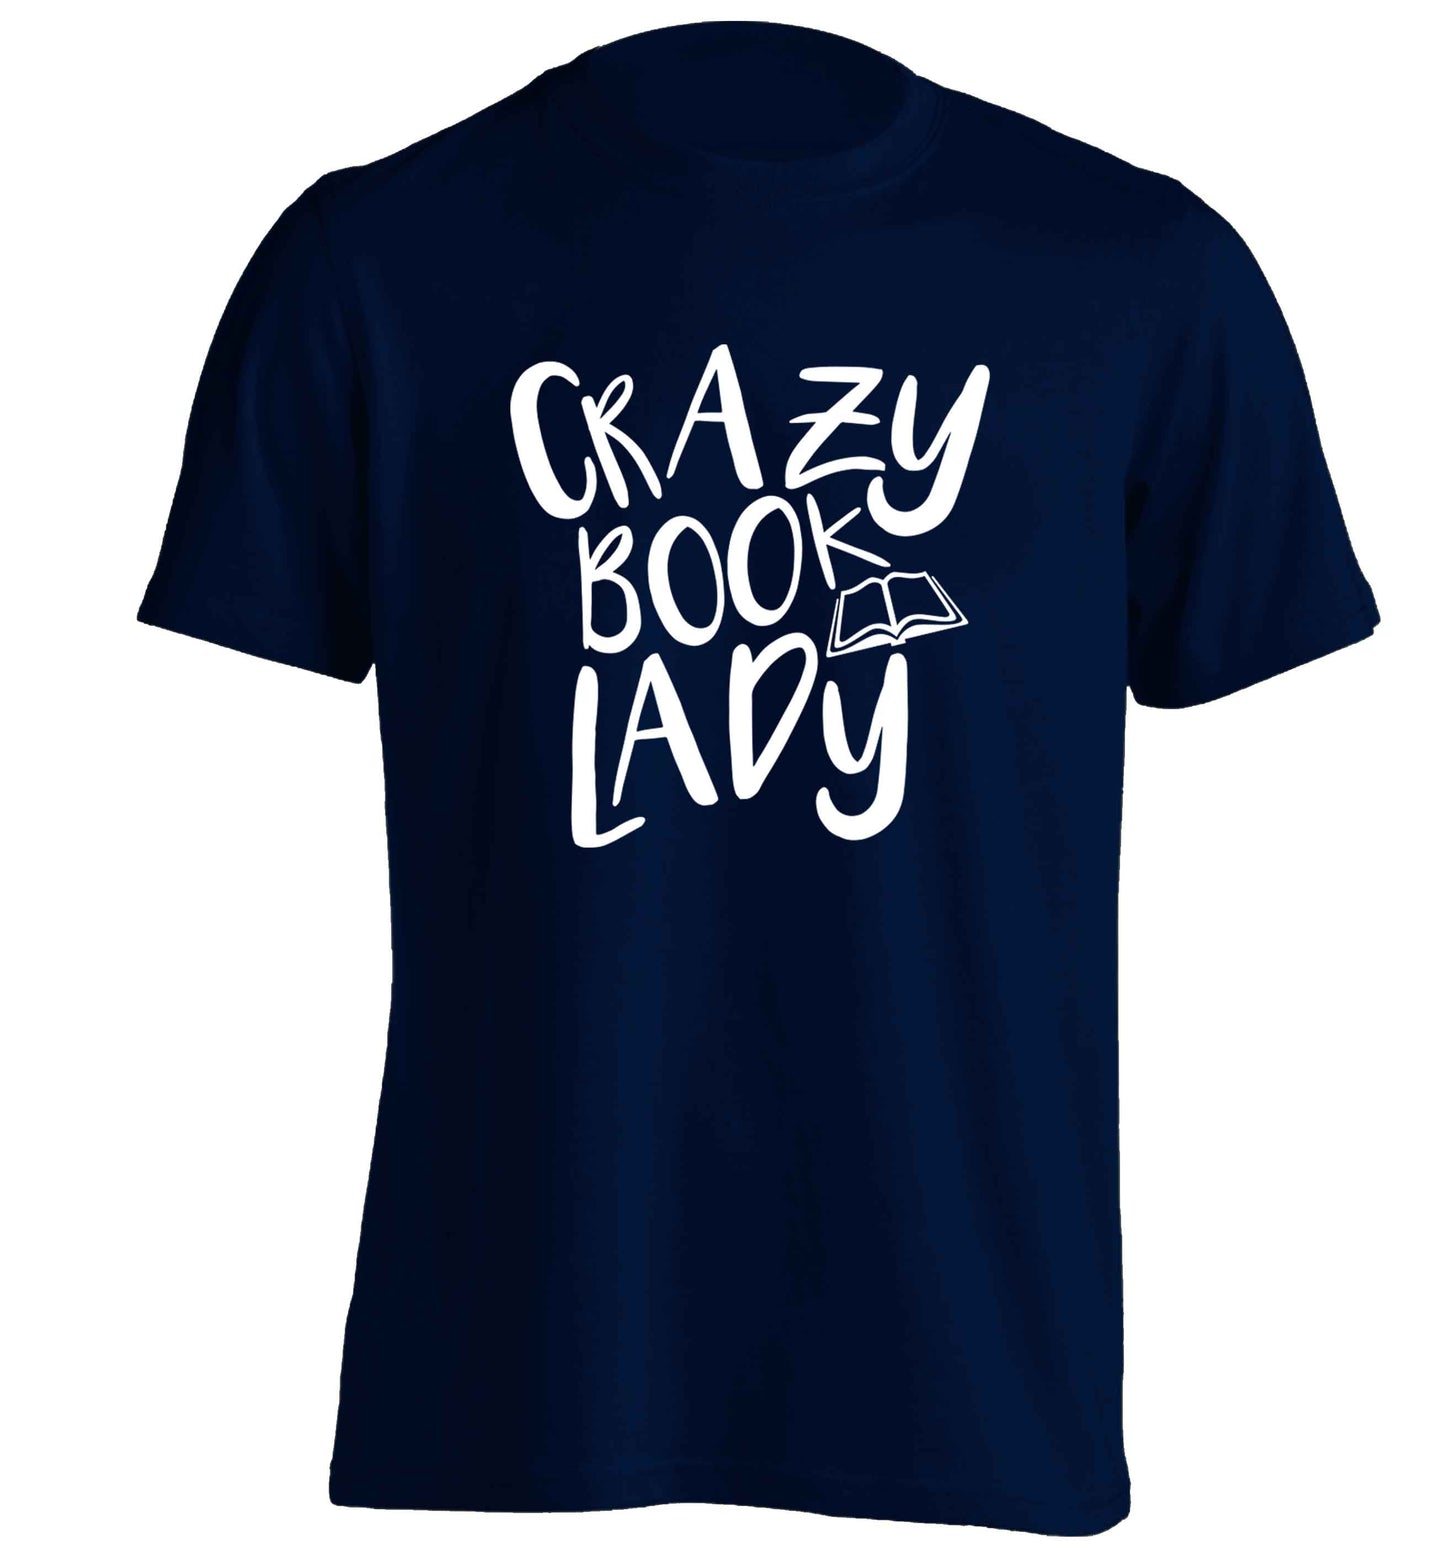 Crazy book lady adults unisex navy Tshirt 2XL